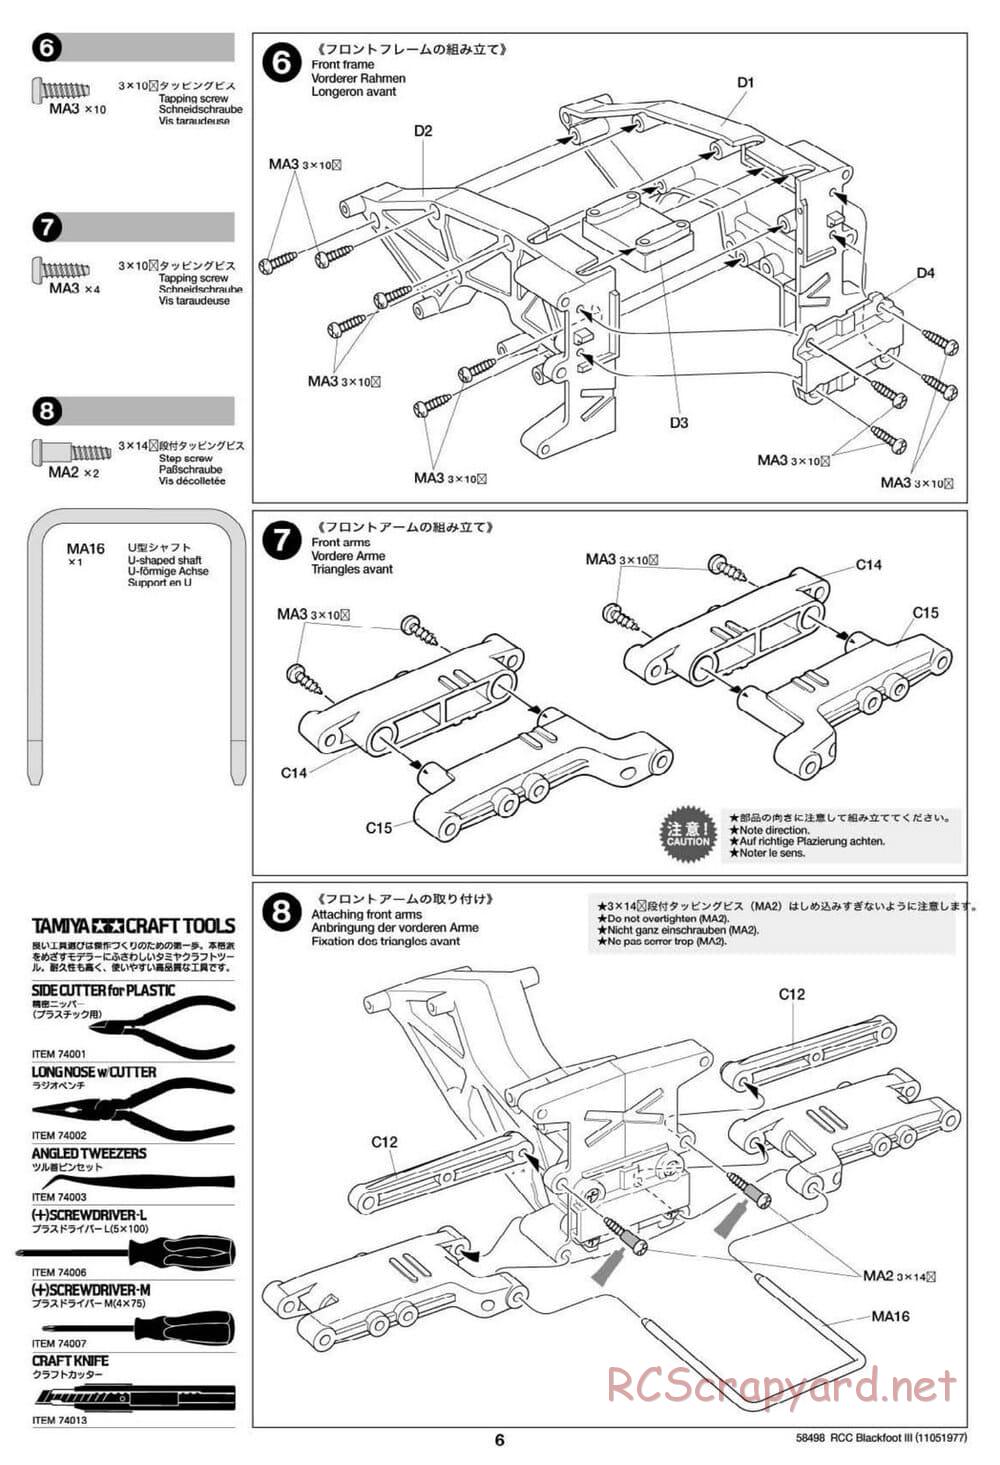 Tamiya - Blackfoot III - WT-01 Chassis - Manual - Page 6